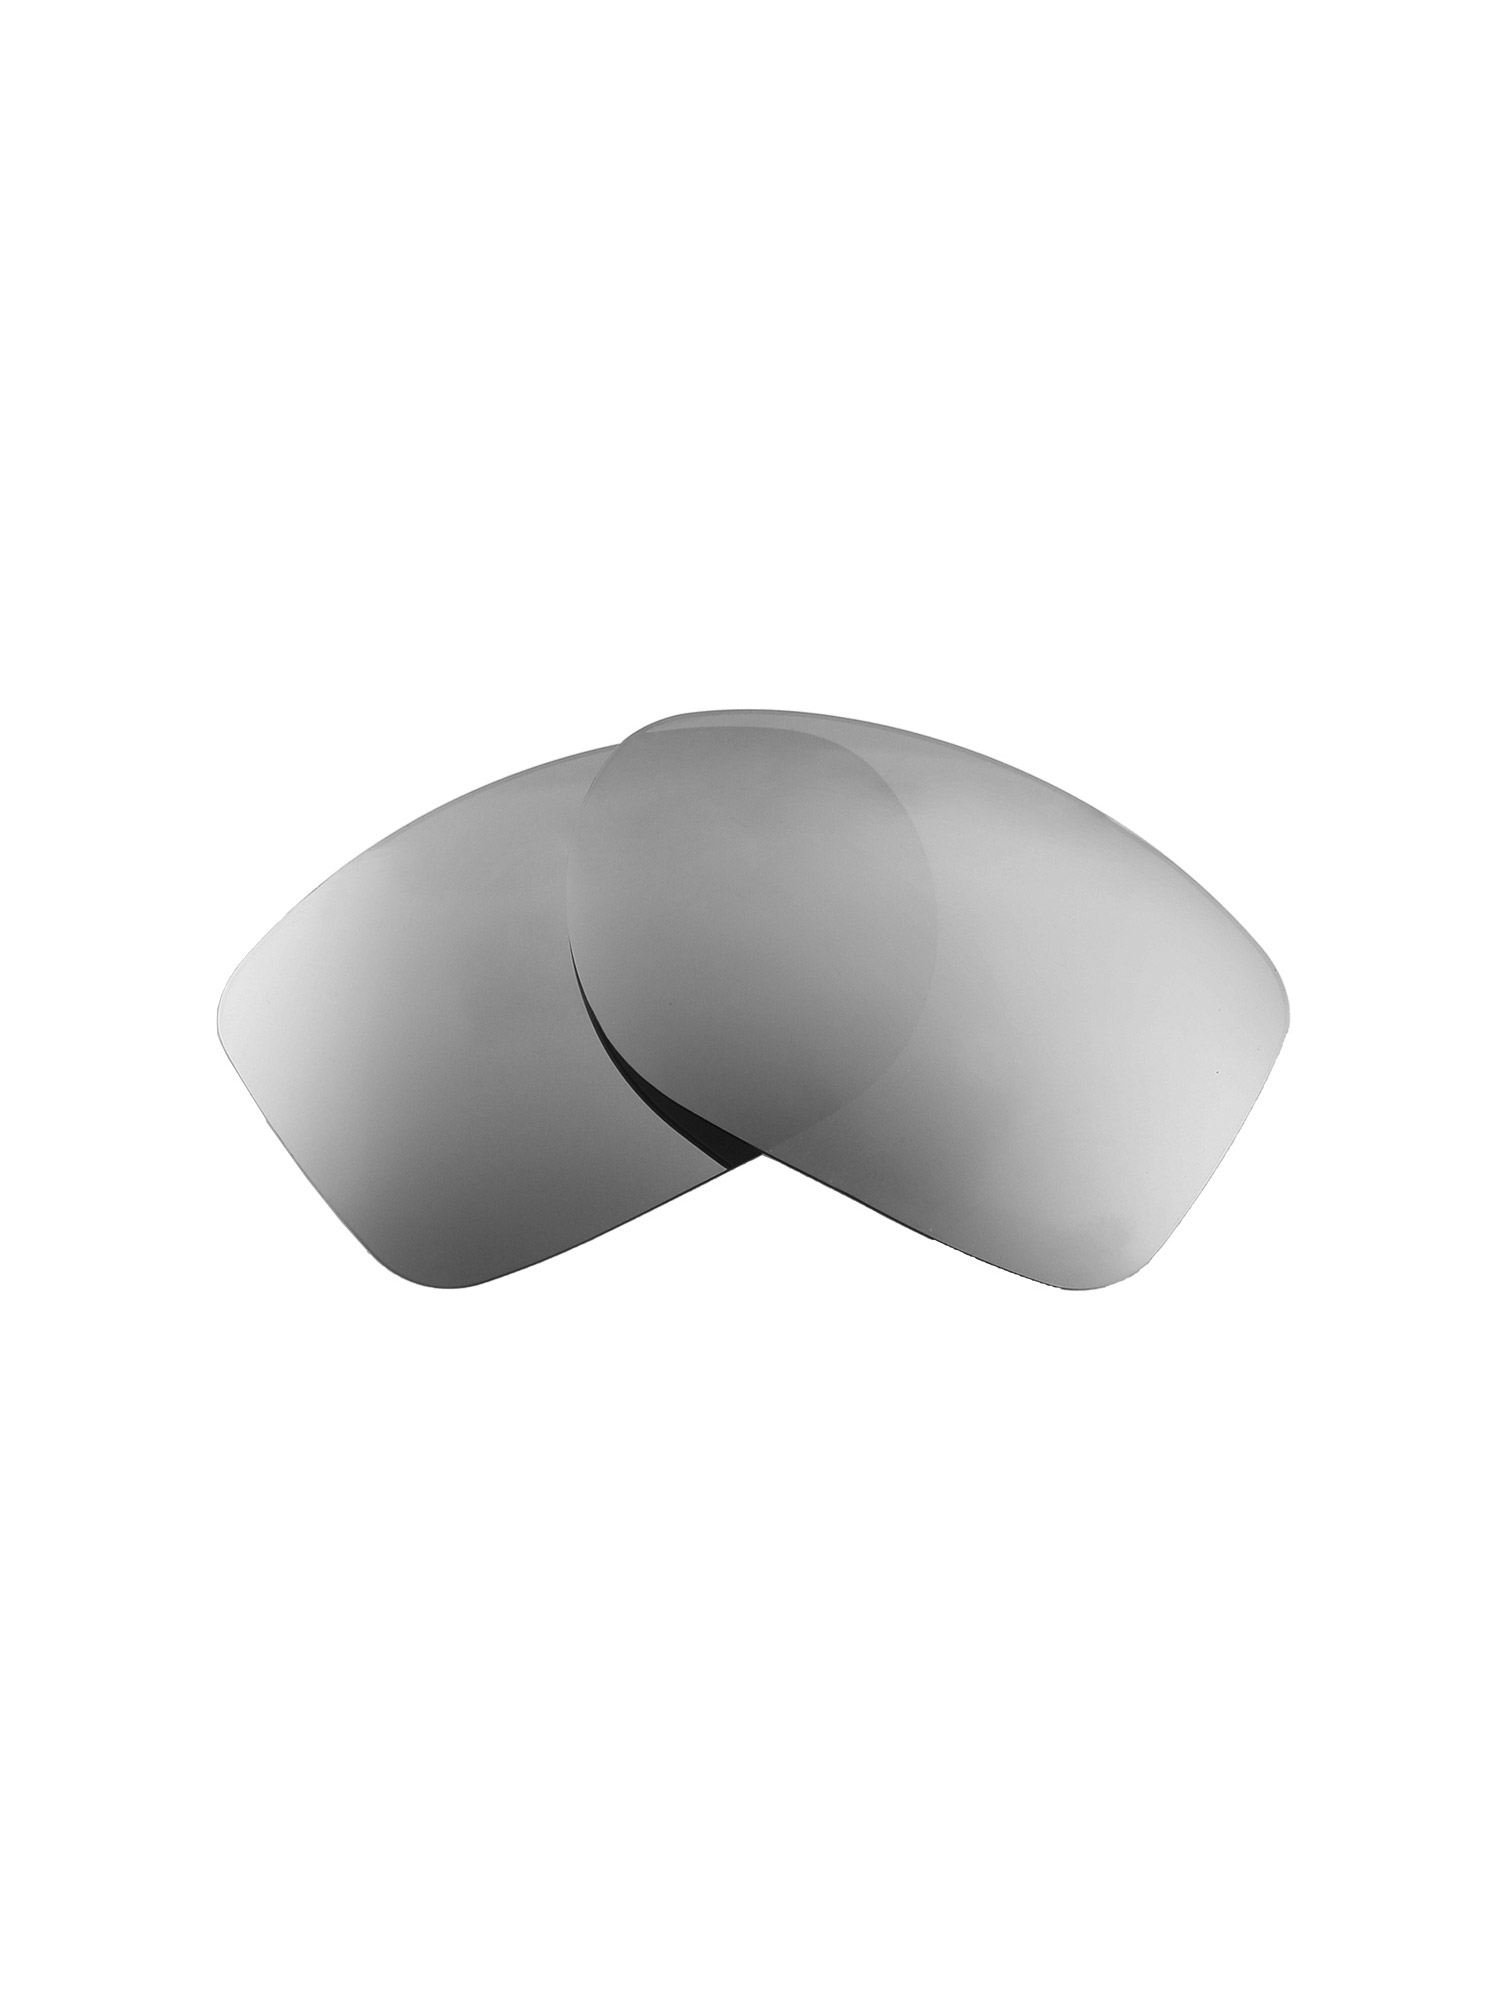 Walleva Titanium Polarized Replacement Lenses for Oakley Gauge 8 M Sunglasses - image 2 of 7